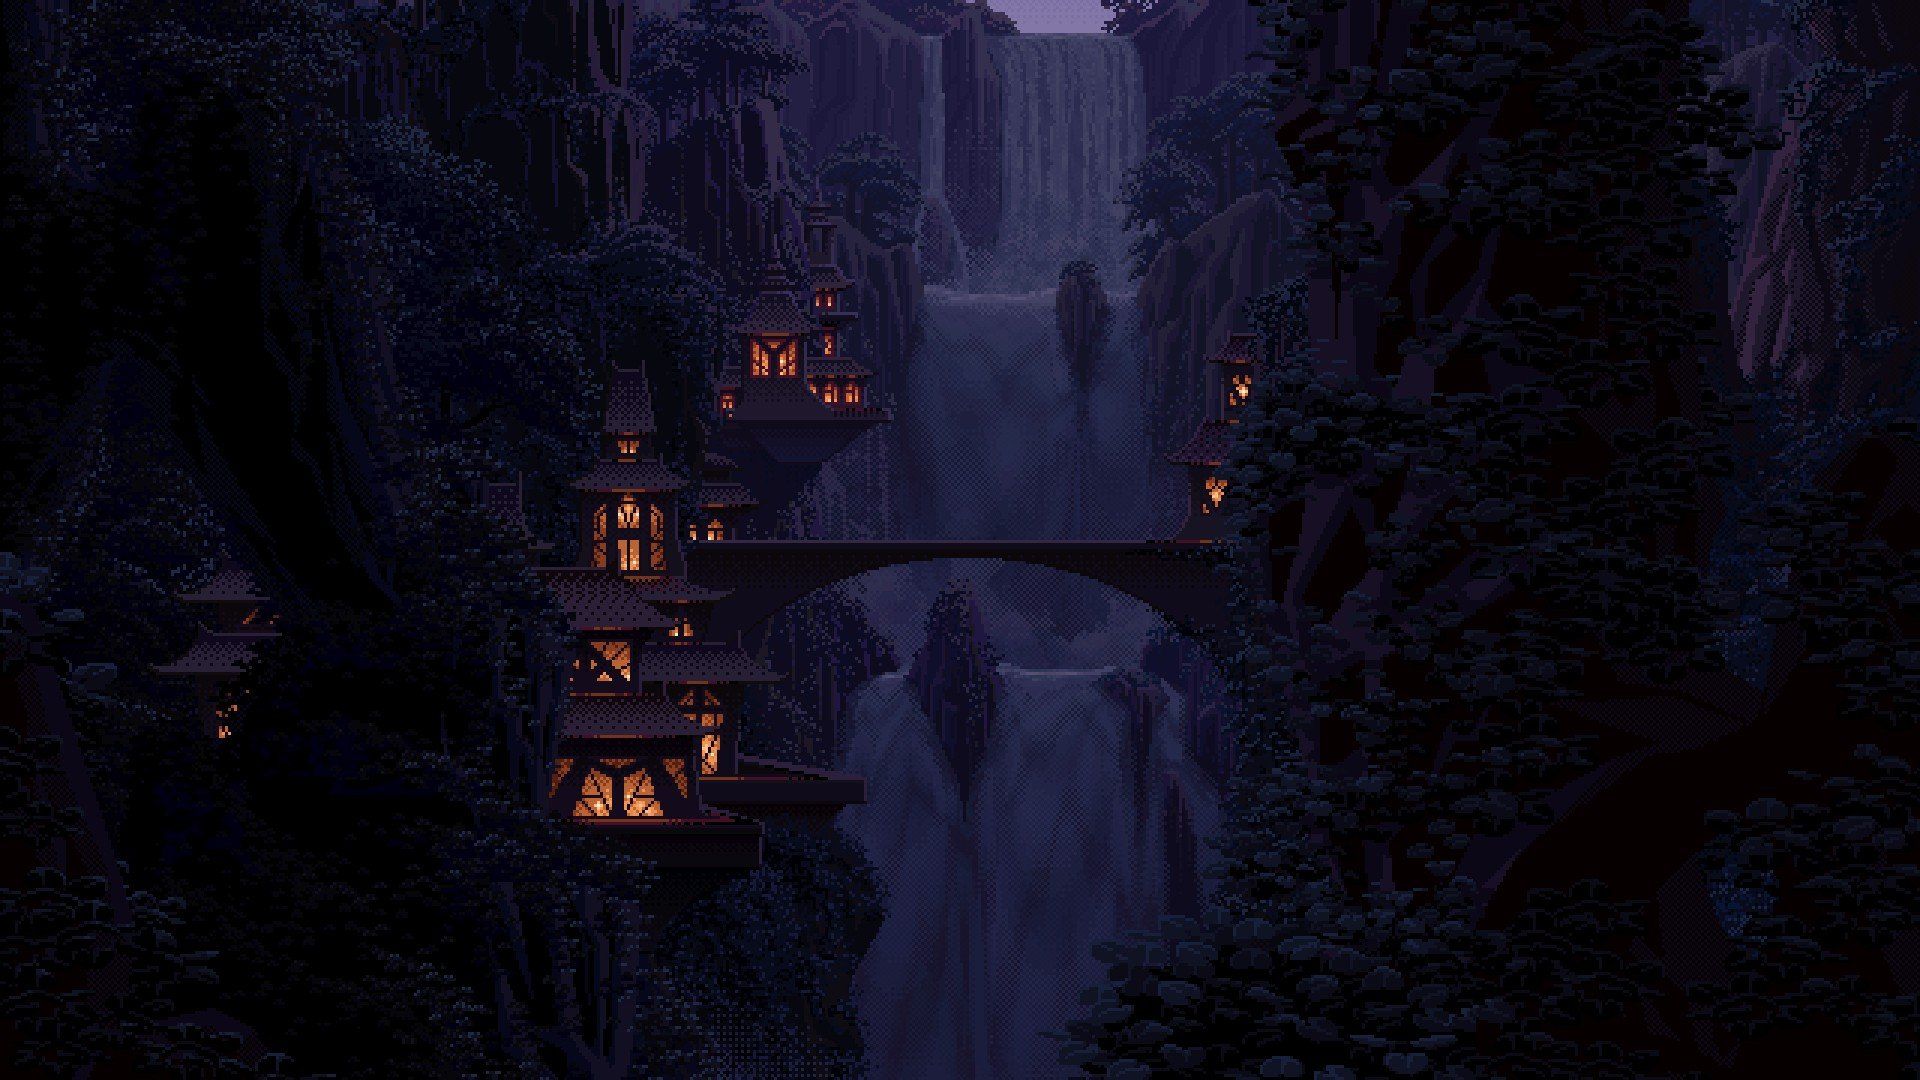 1920x1080 pixel art fantasy art digital art waterfall bridge wallpaper JPG 338 kB Gallery HD Wallpaper